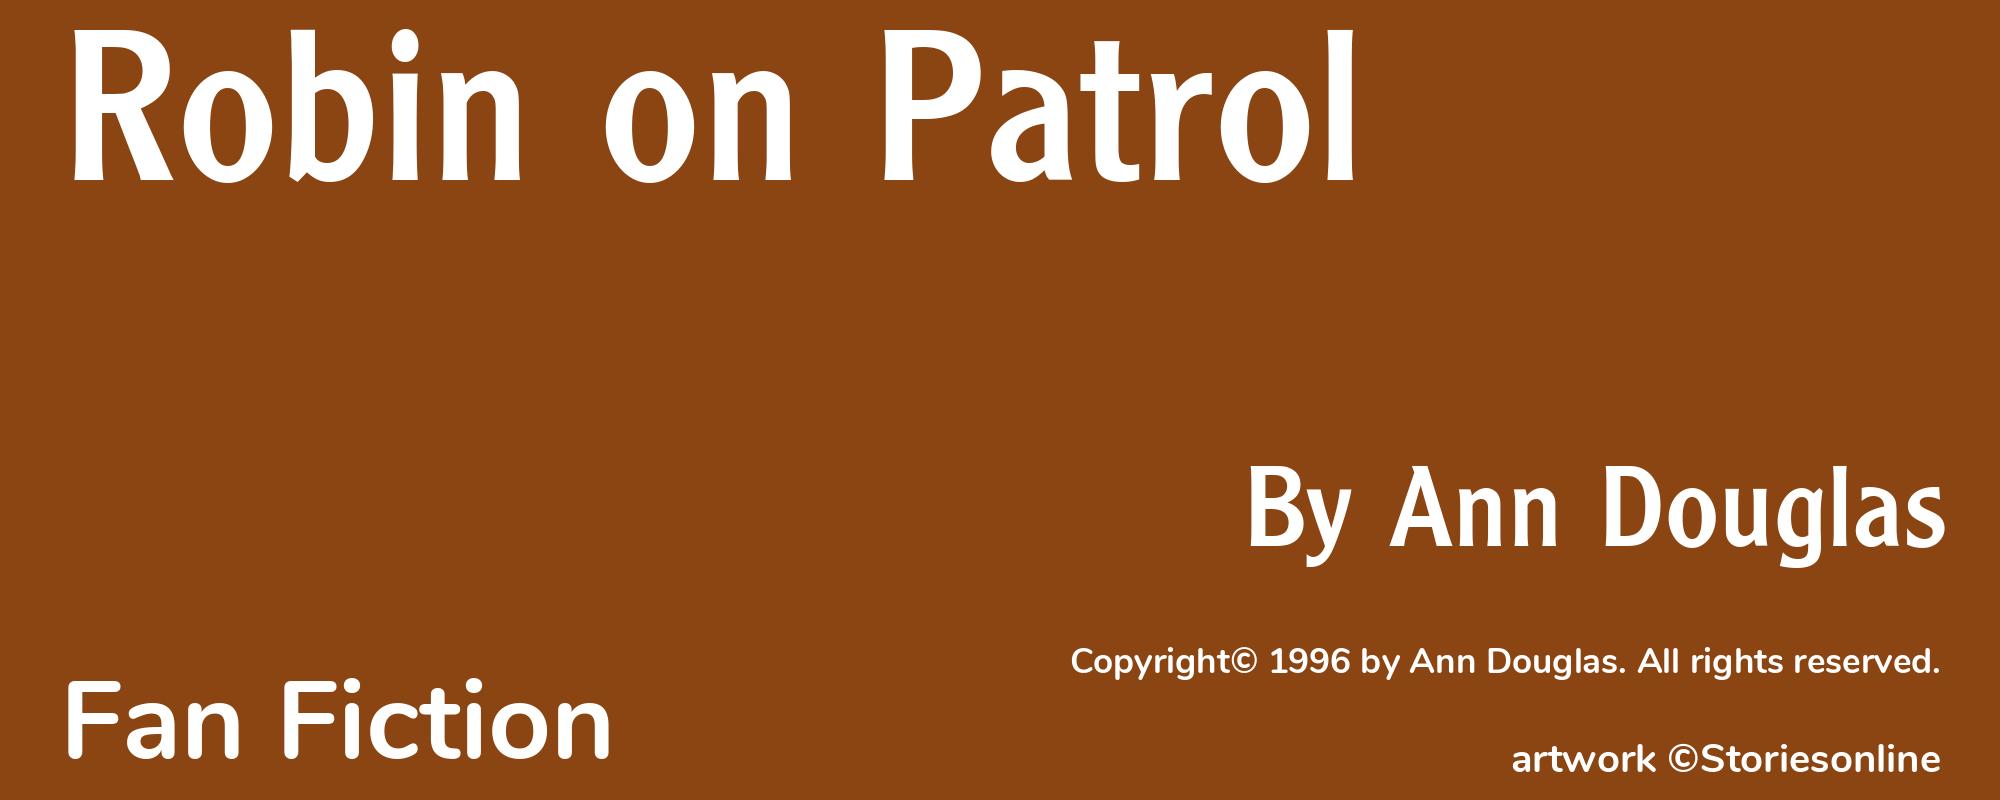 Robin on Patrol - Cover